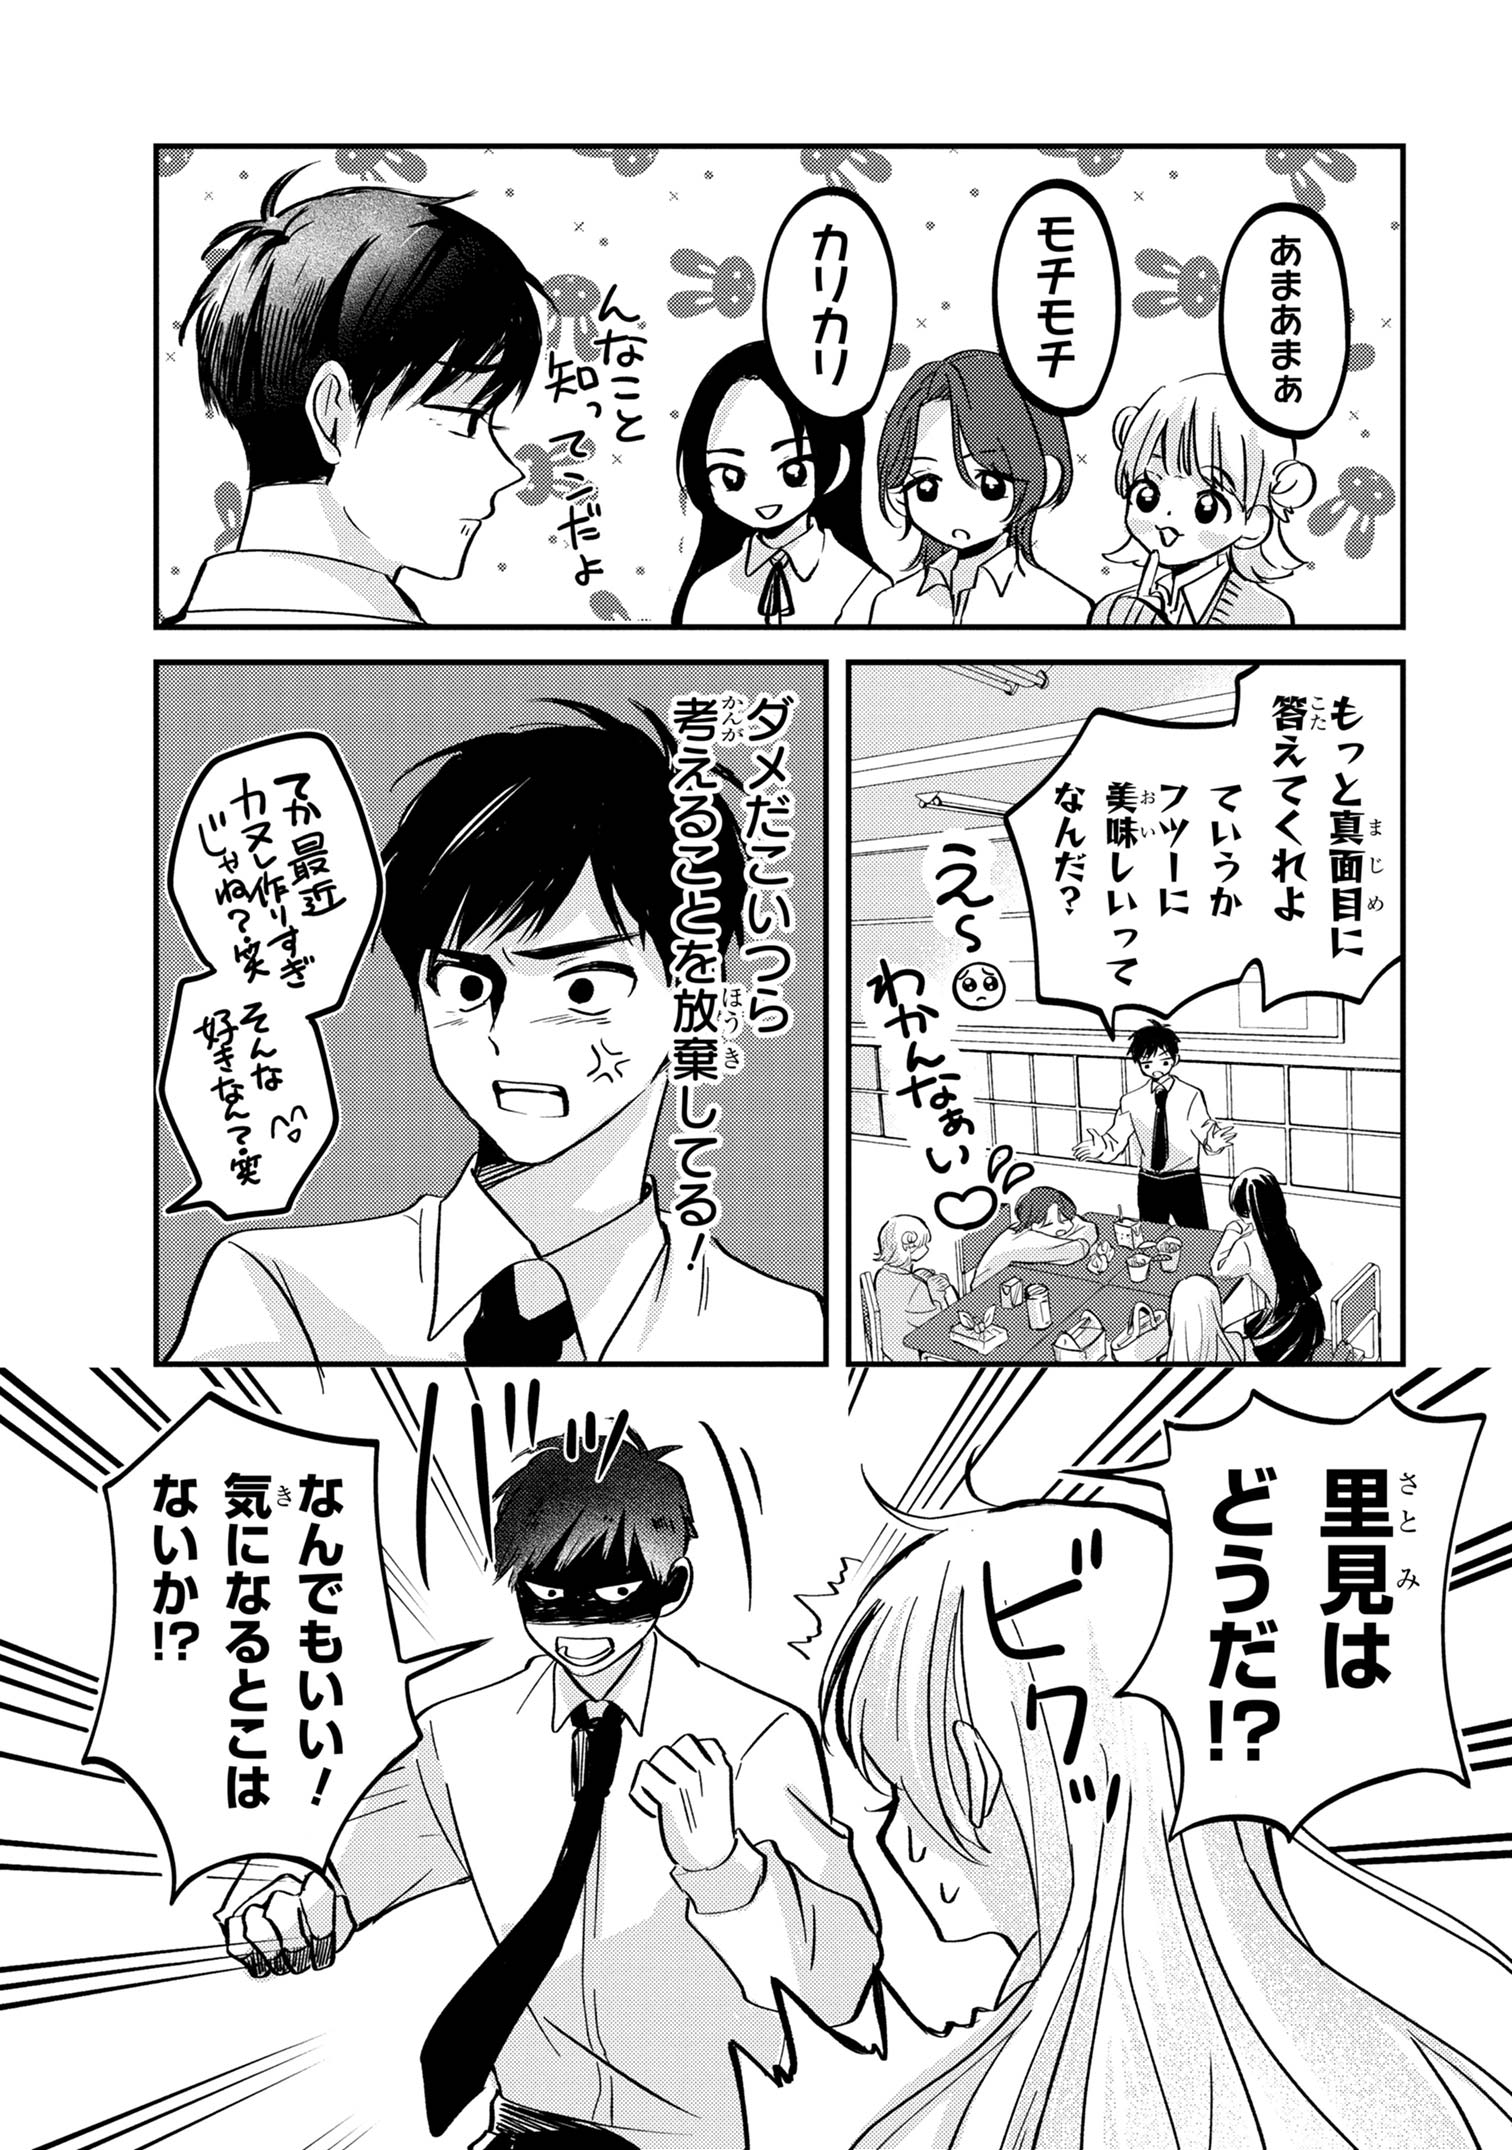 Aisare Tenshi na Classmate ga, Ore ni Dake Itazura ni Hohoemu - Chapter 1 - Page 10